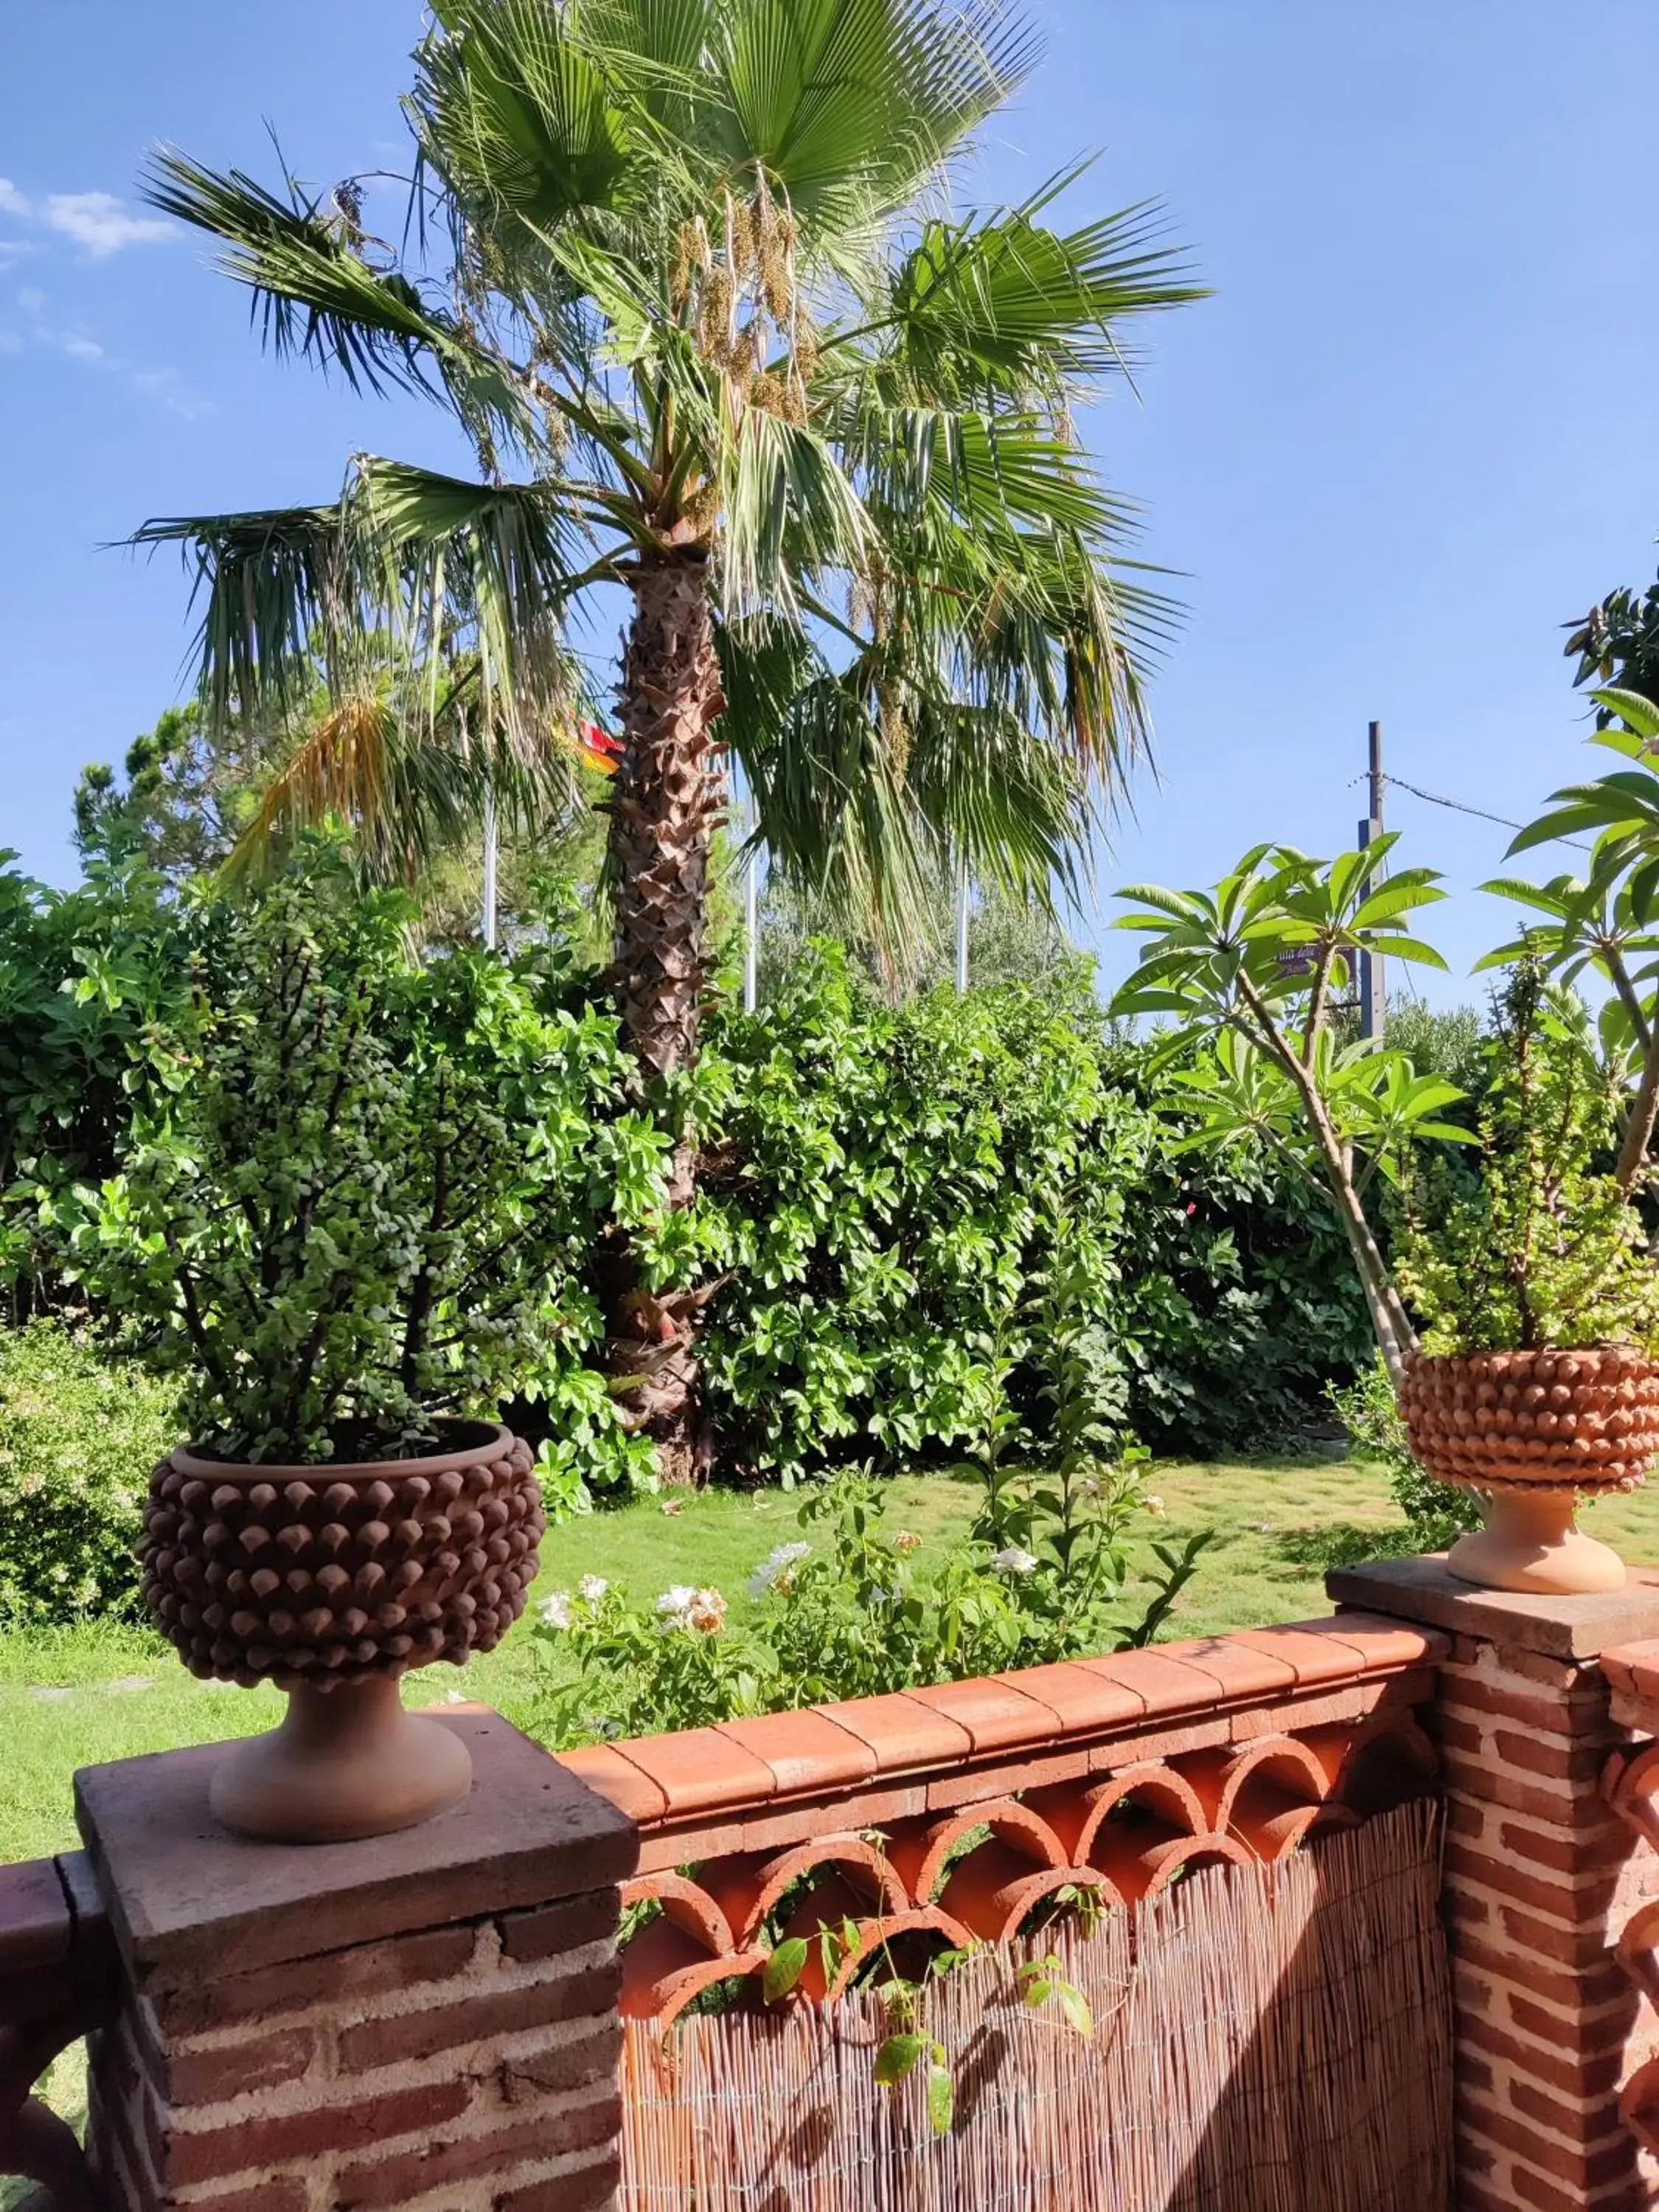 Garden in Villa delle Palme